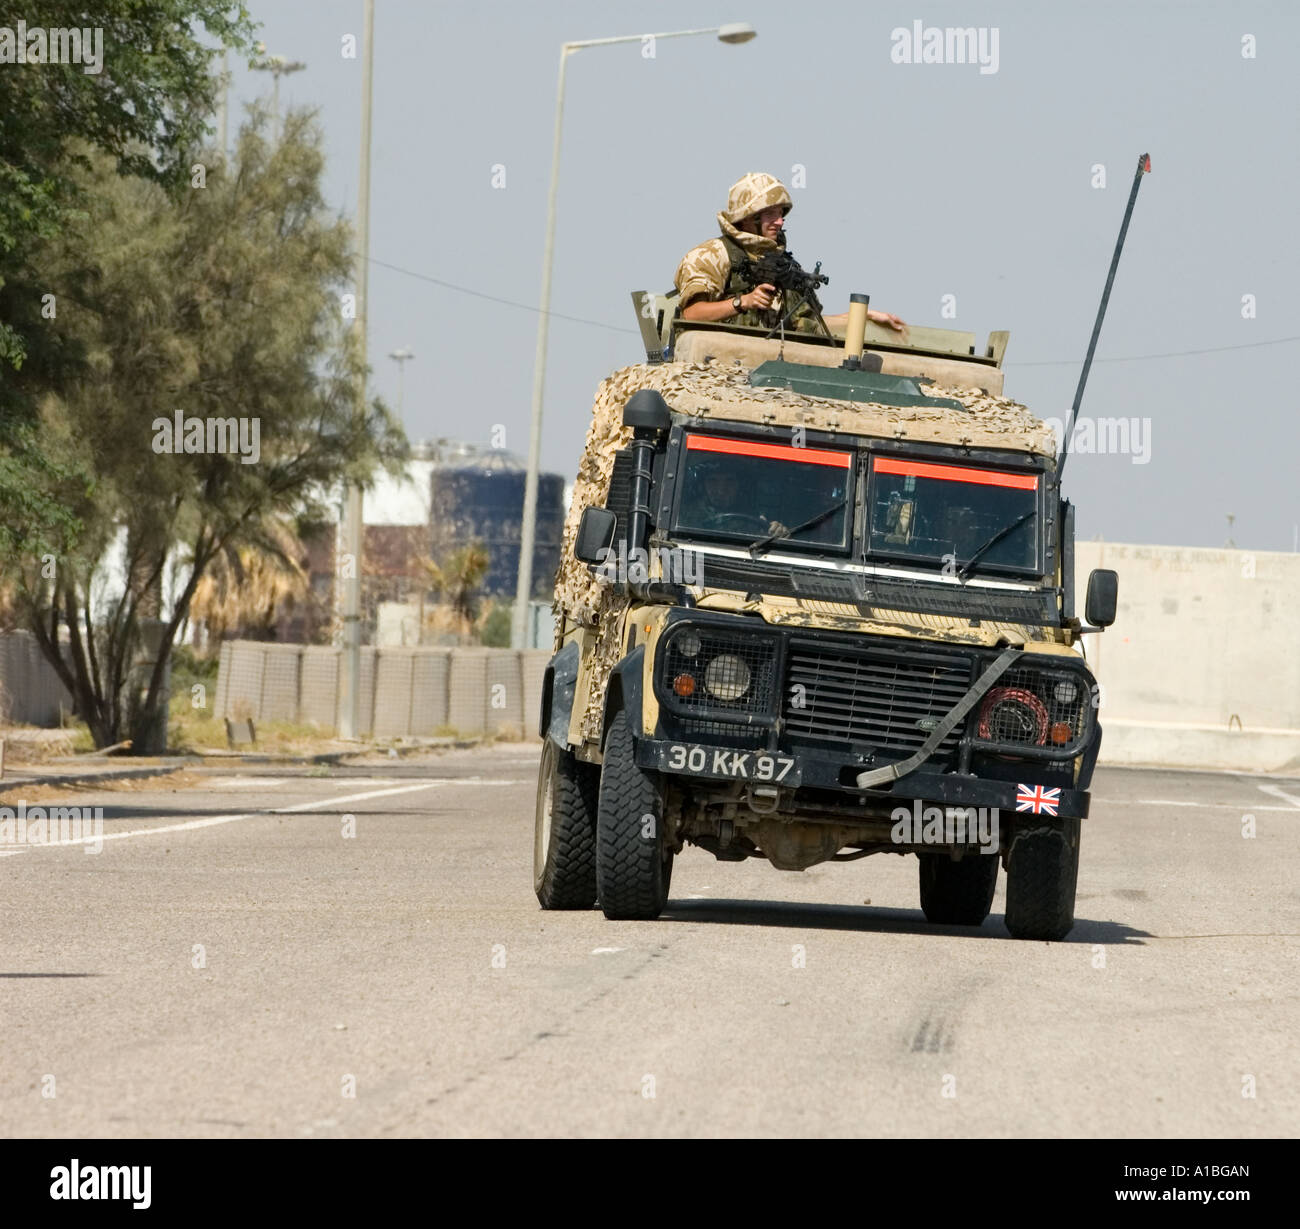 Land rover on Ambush Exercise in Basrah, Iraq Stock Photo